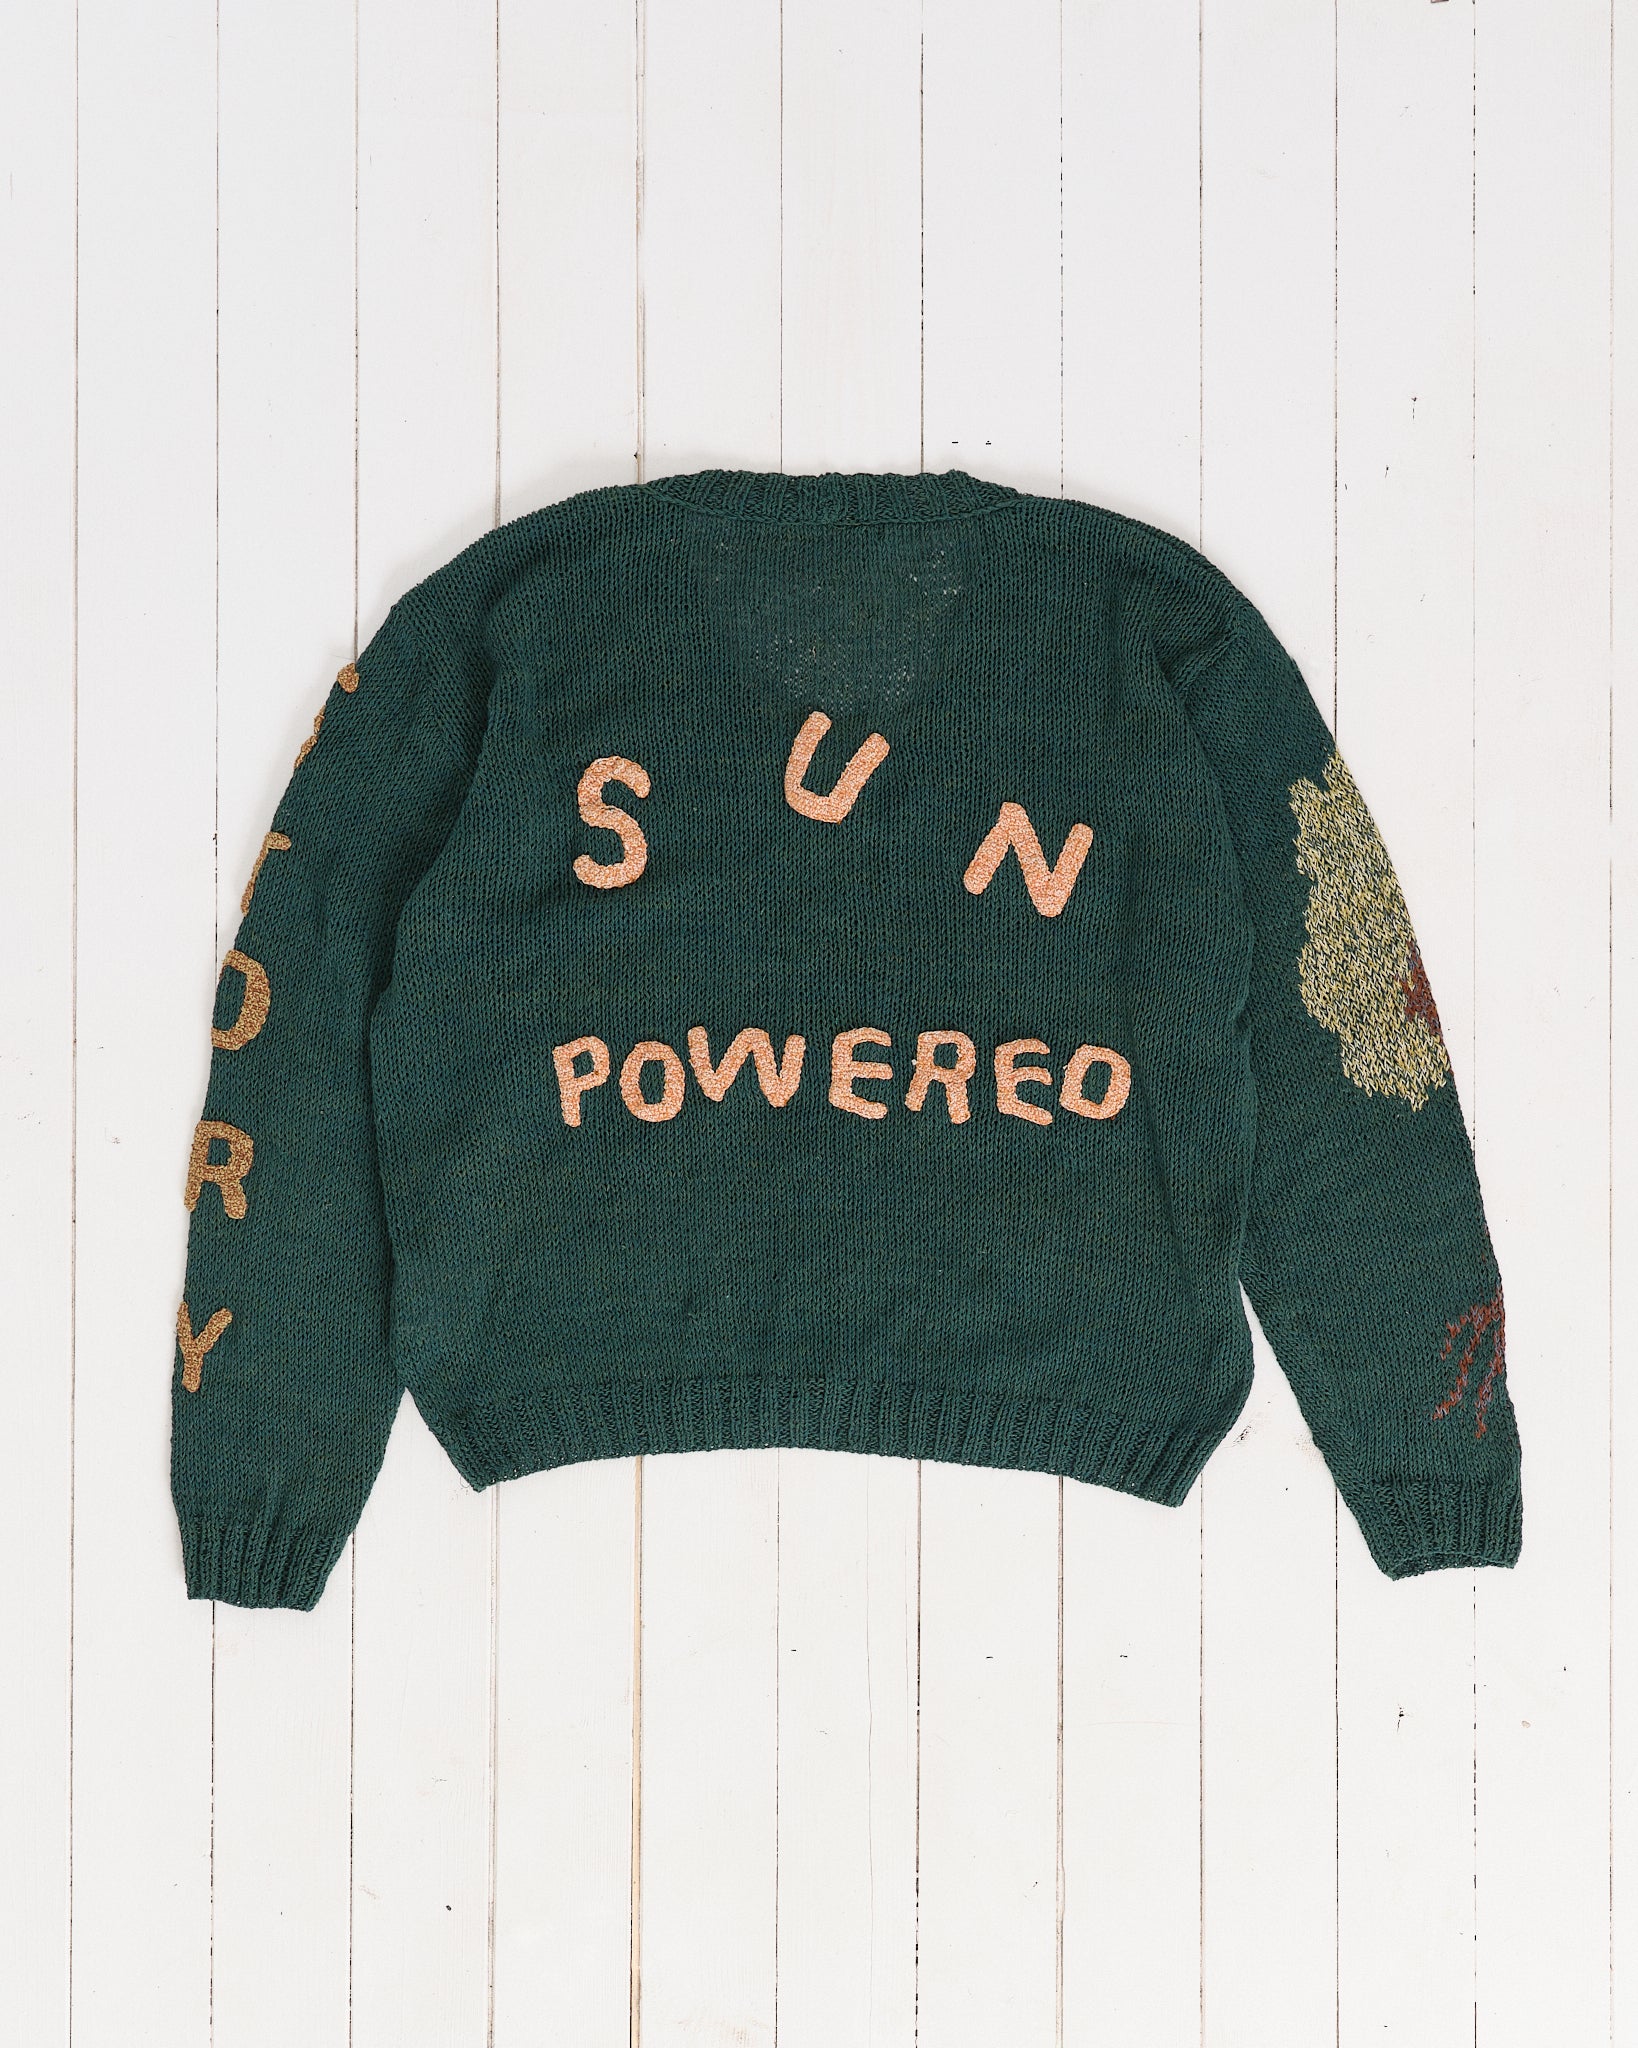 Twinsun Knit Cardigan - Sun Powered